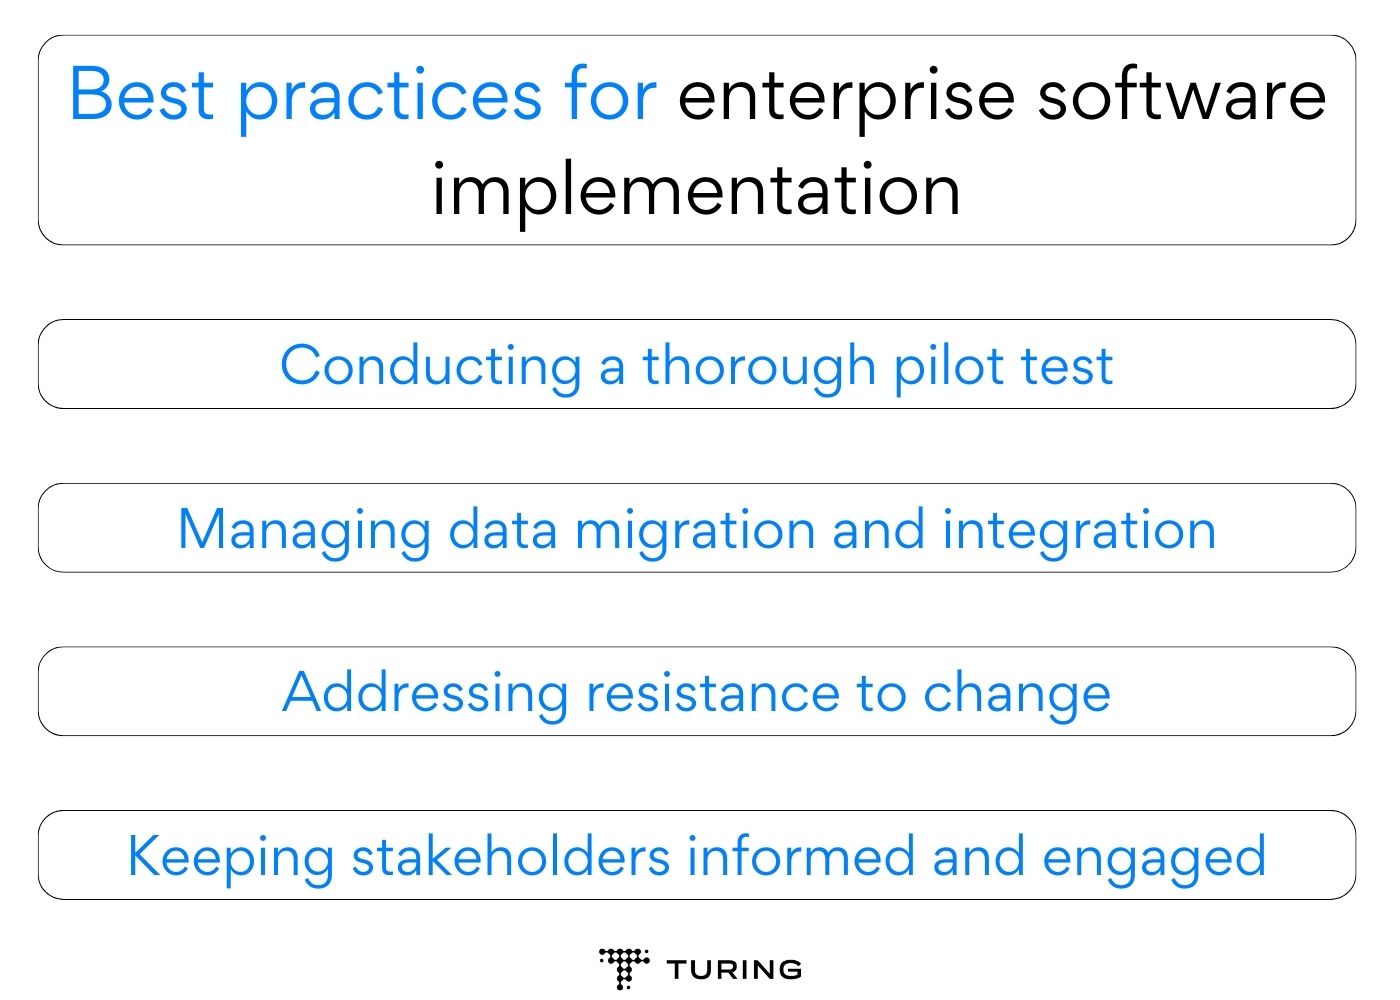 Best practices for enterprise software implementation